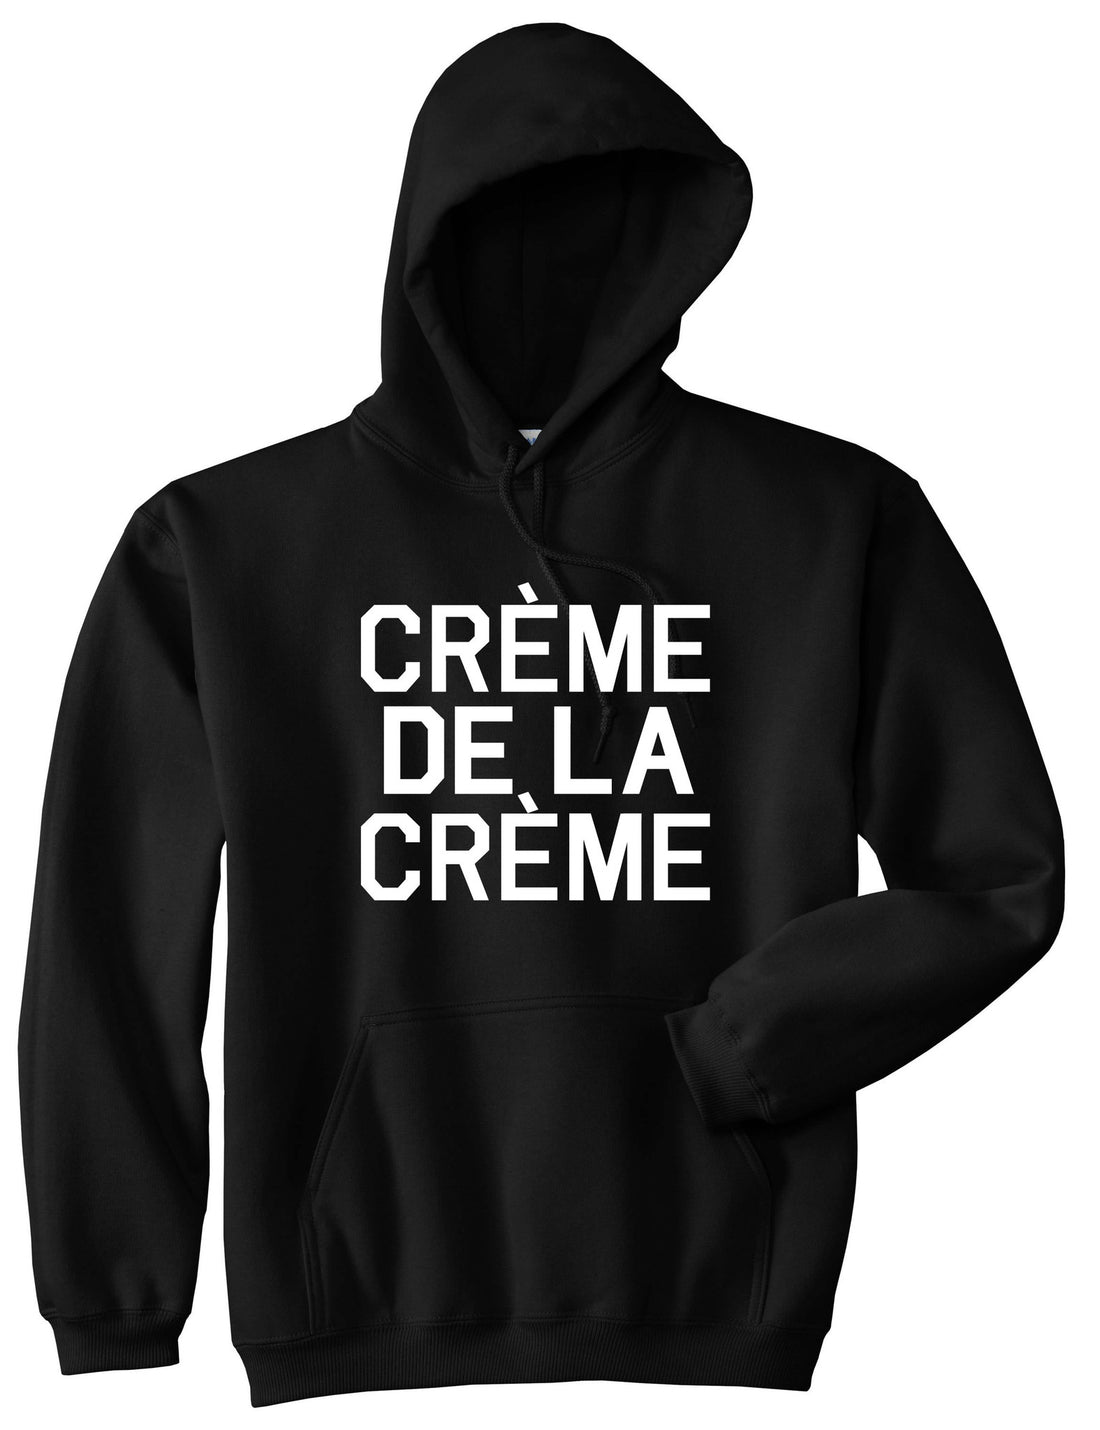 Creme De La Creme Celebrity Fashion Crop Boys Kids Pullover Hoodie Hoody In Black by Kings Of NY